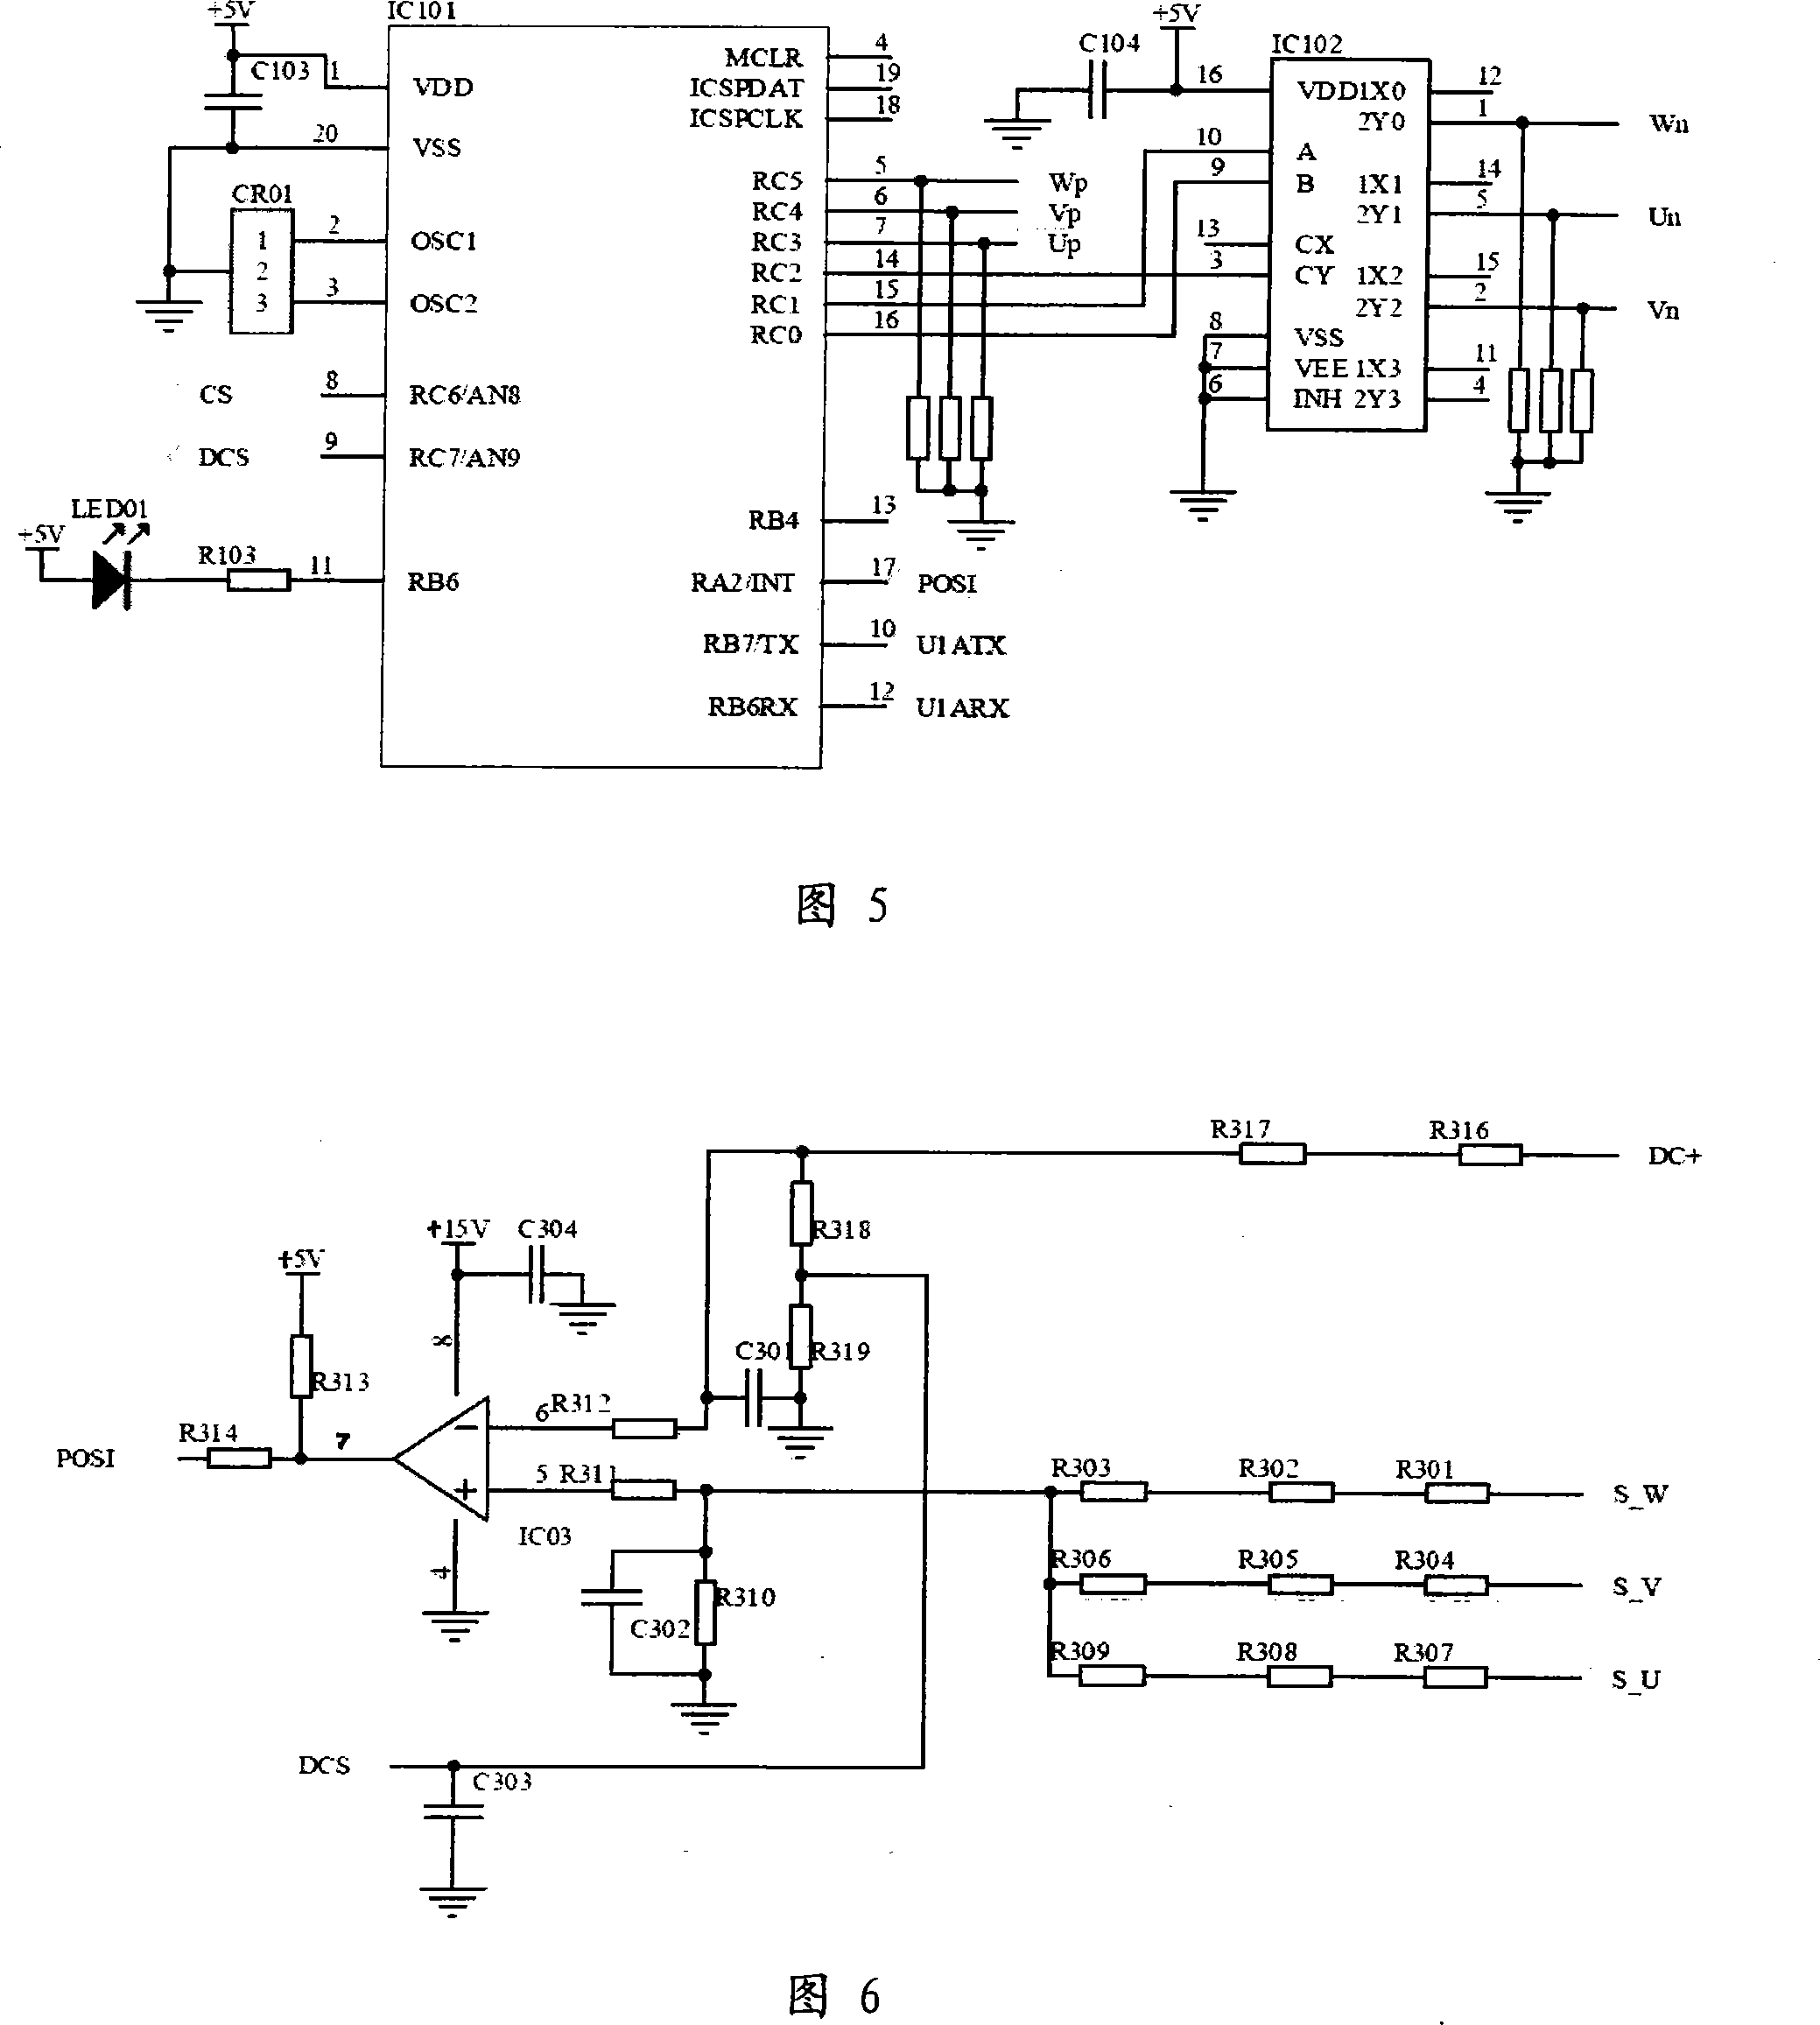 Direct current compressor drive circuit